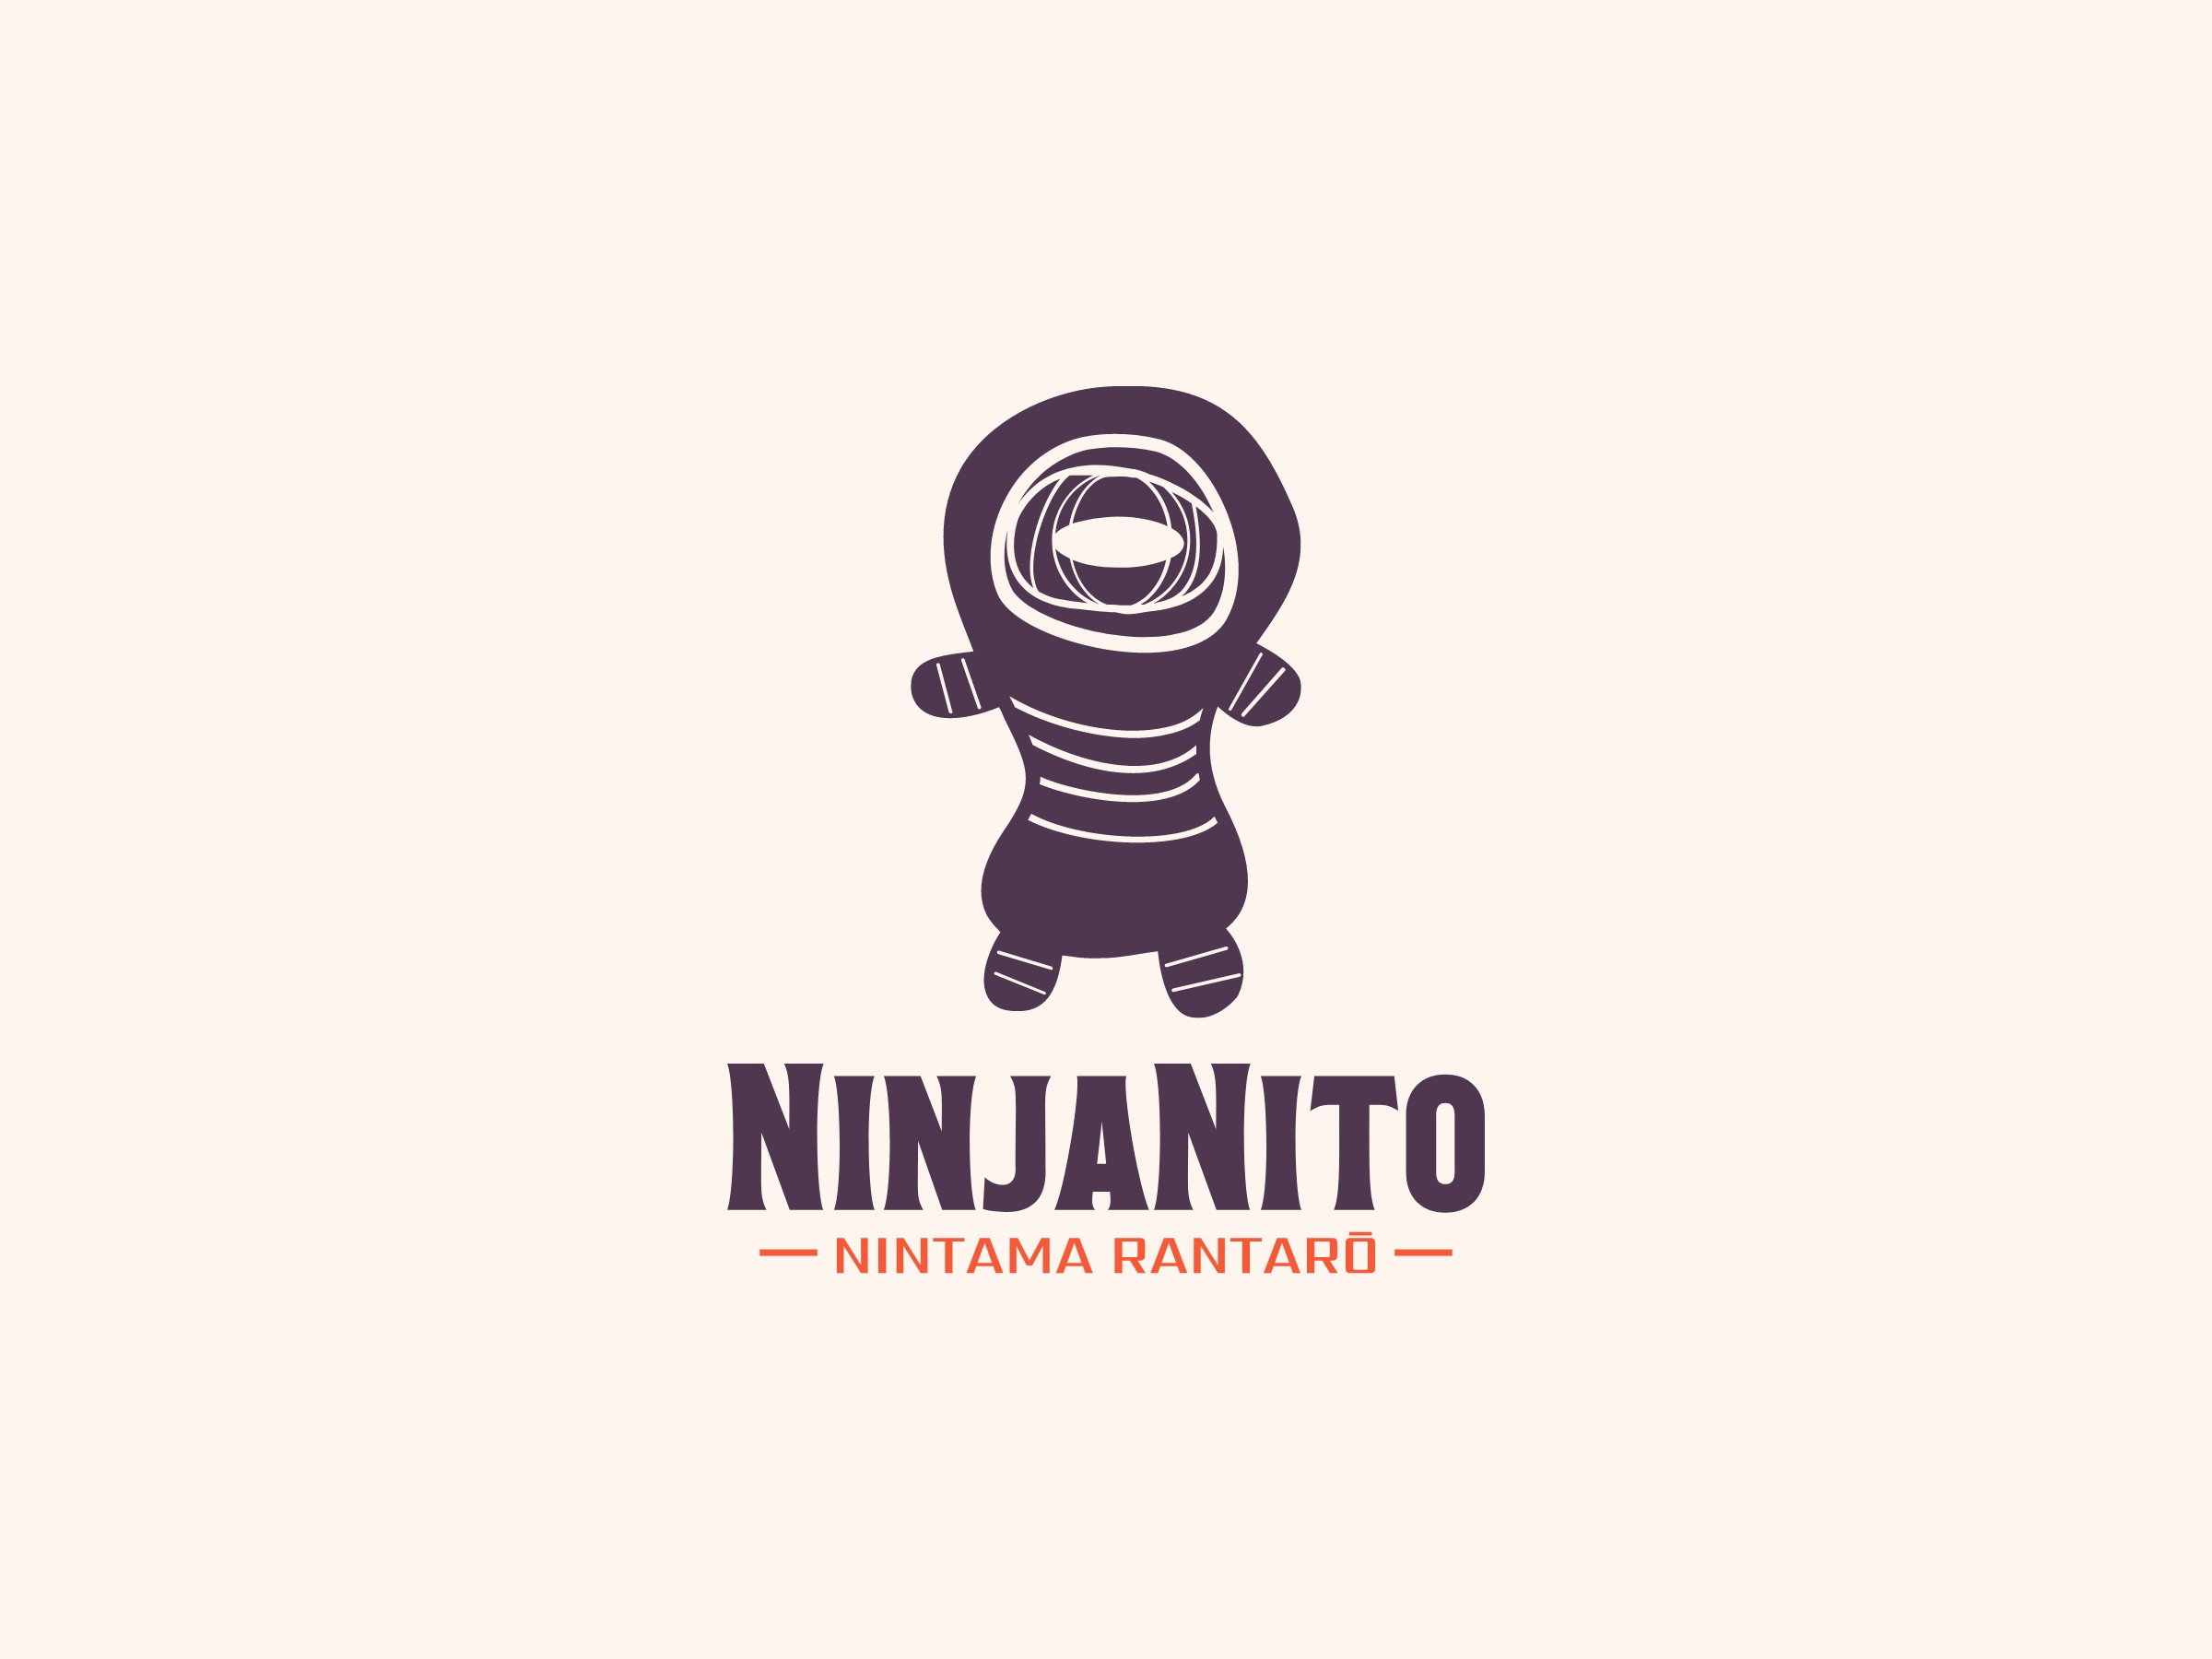 NinjaNito - Nintama Rantarō